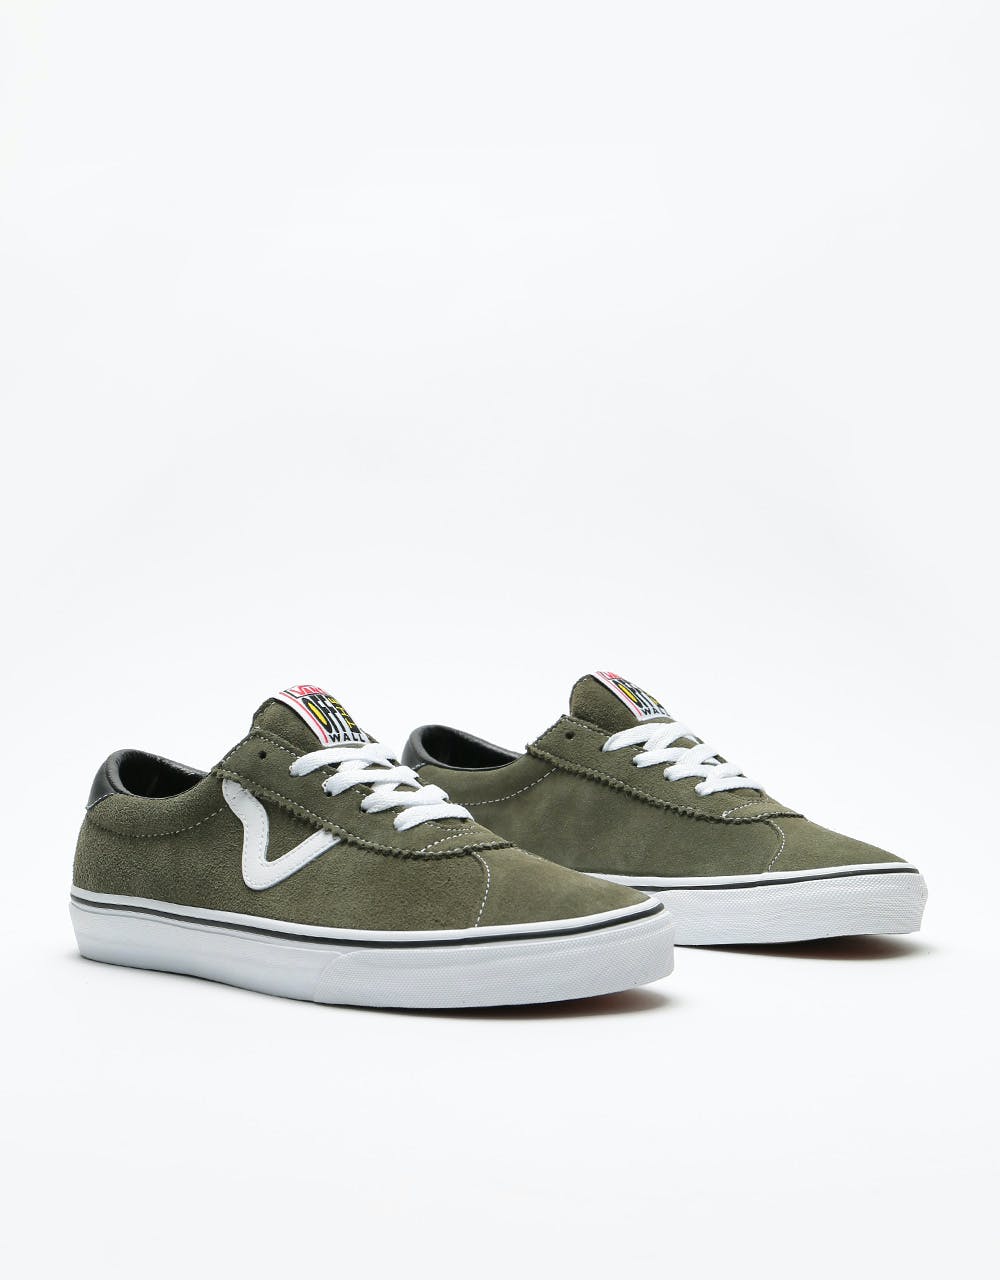 Vans Vans Sport Skate Shoes - Grape Leaf/True White